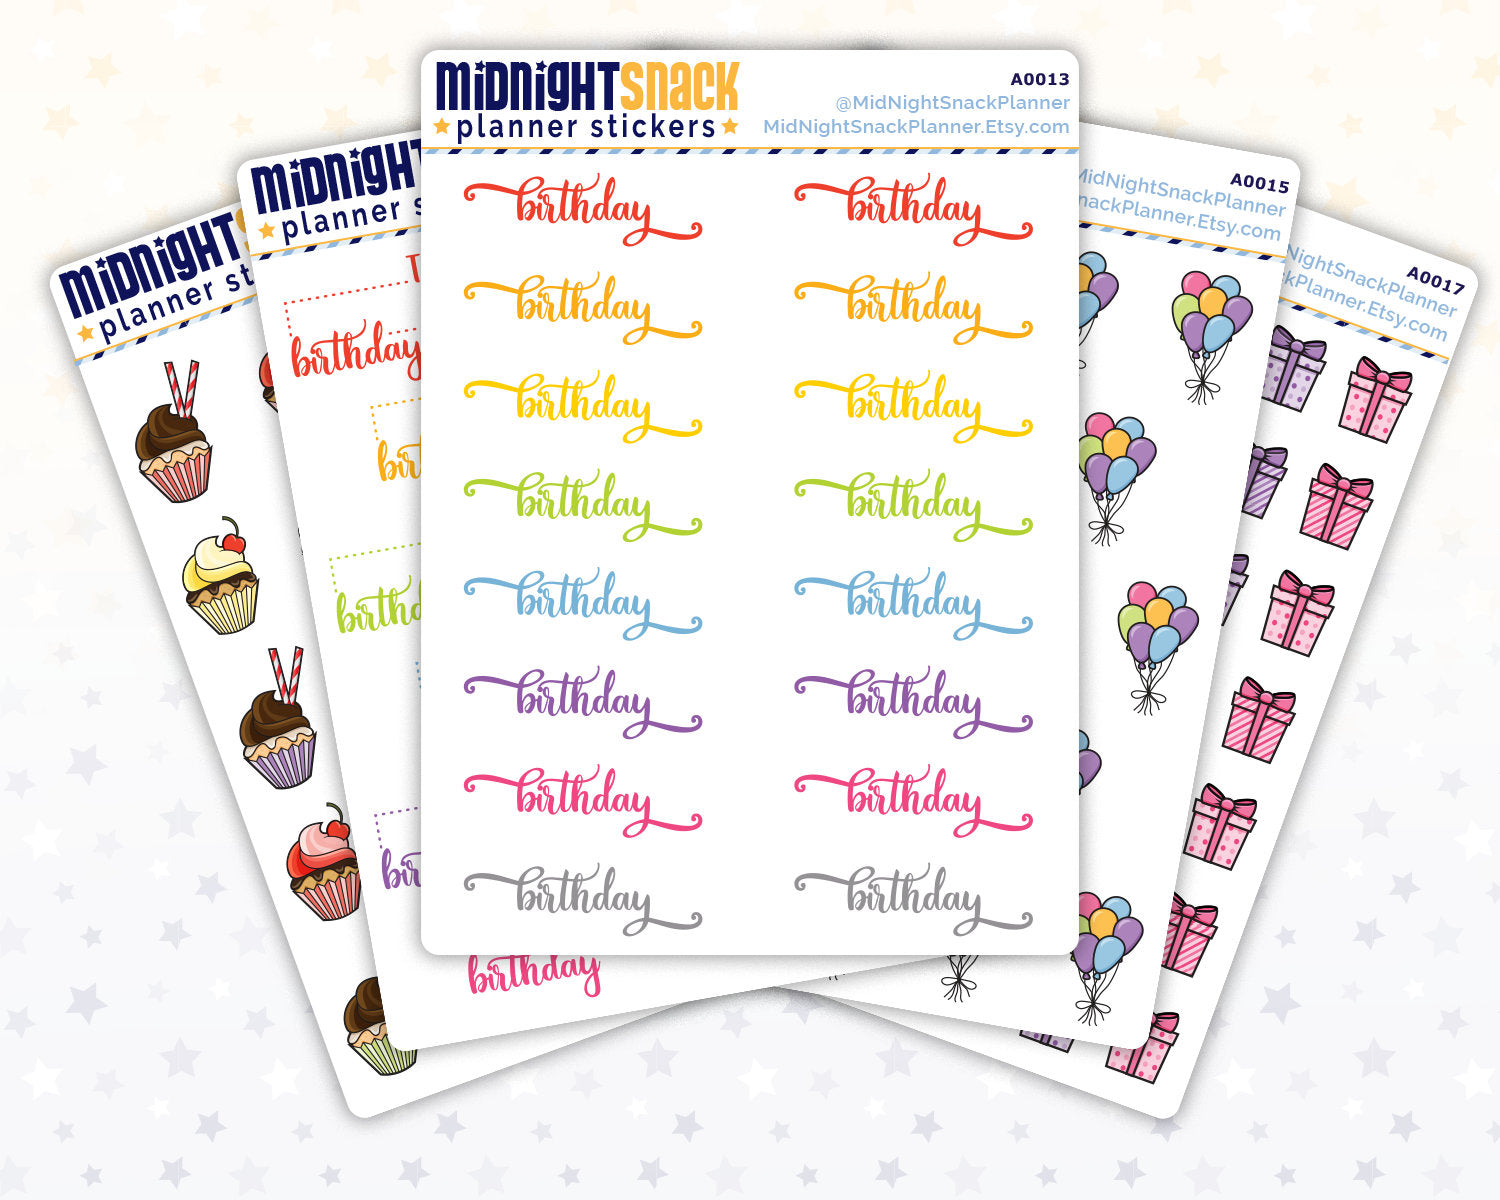 5 Sheet Bundle of Birthday Planner Stickers from Midnight Snack Planner